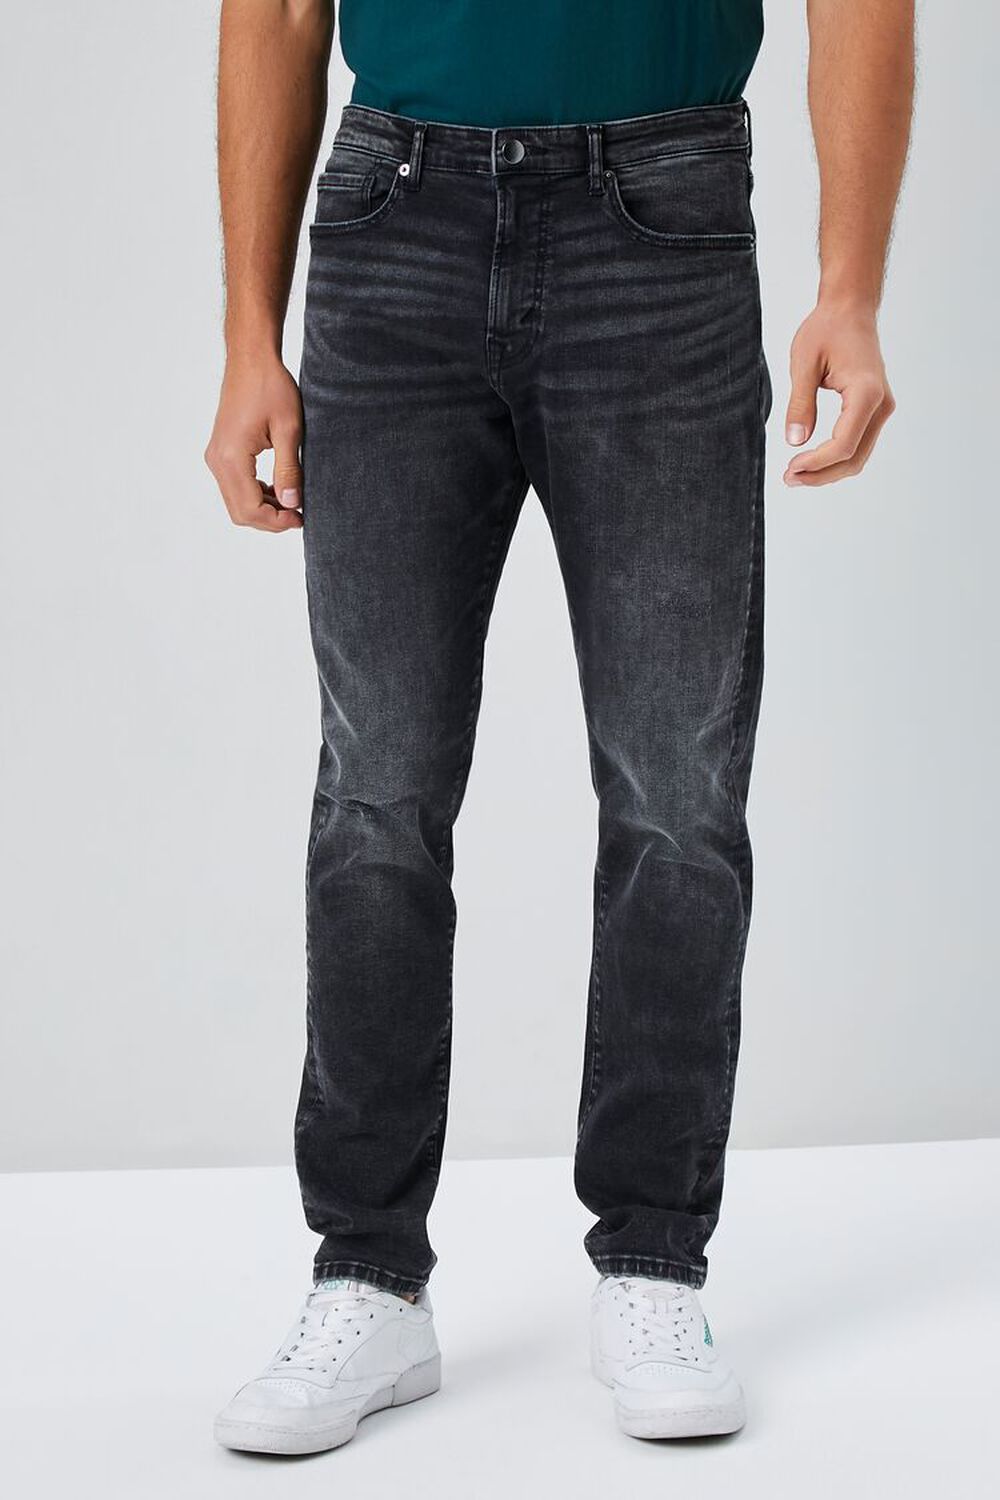 BLACK Stonewash Slim-Fit Jeans, image 2